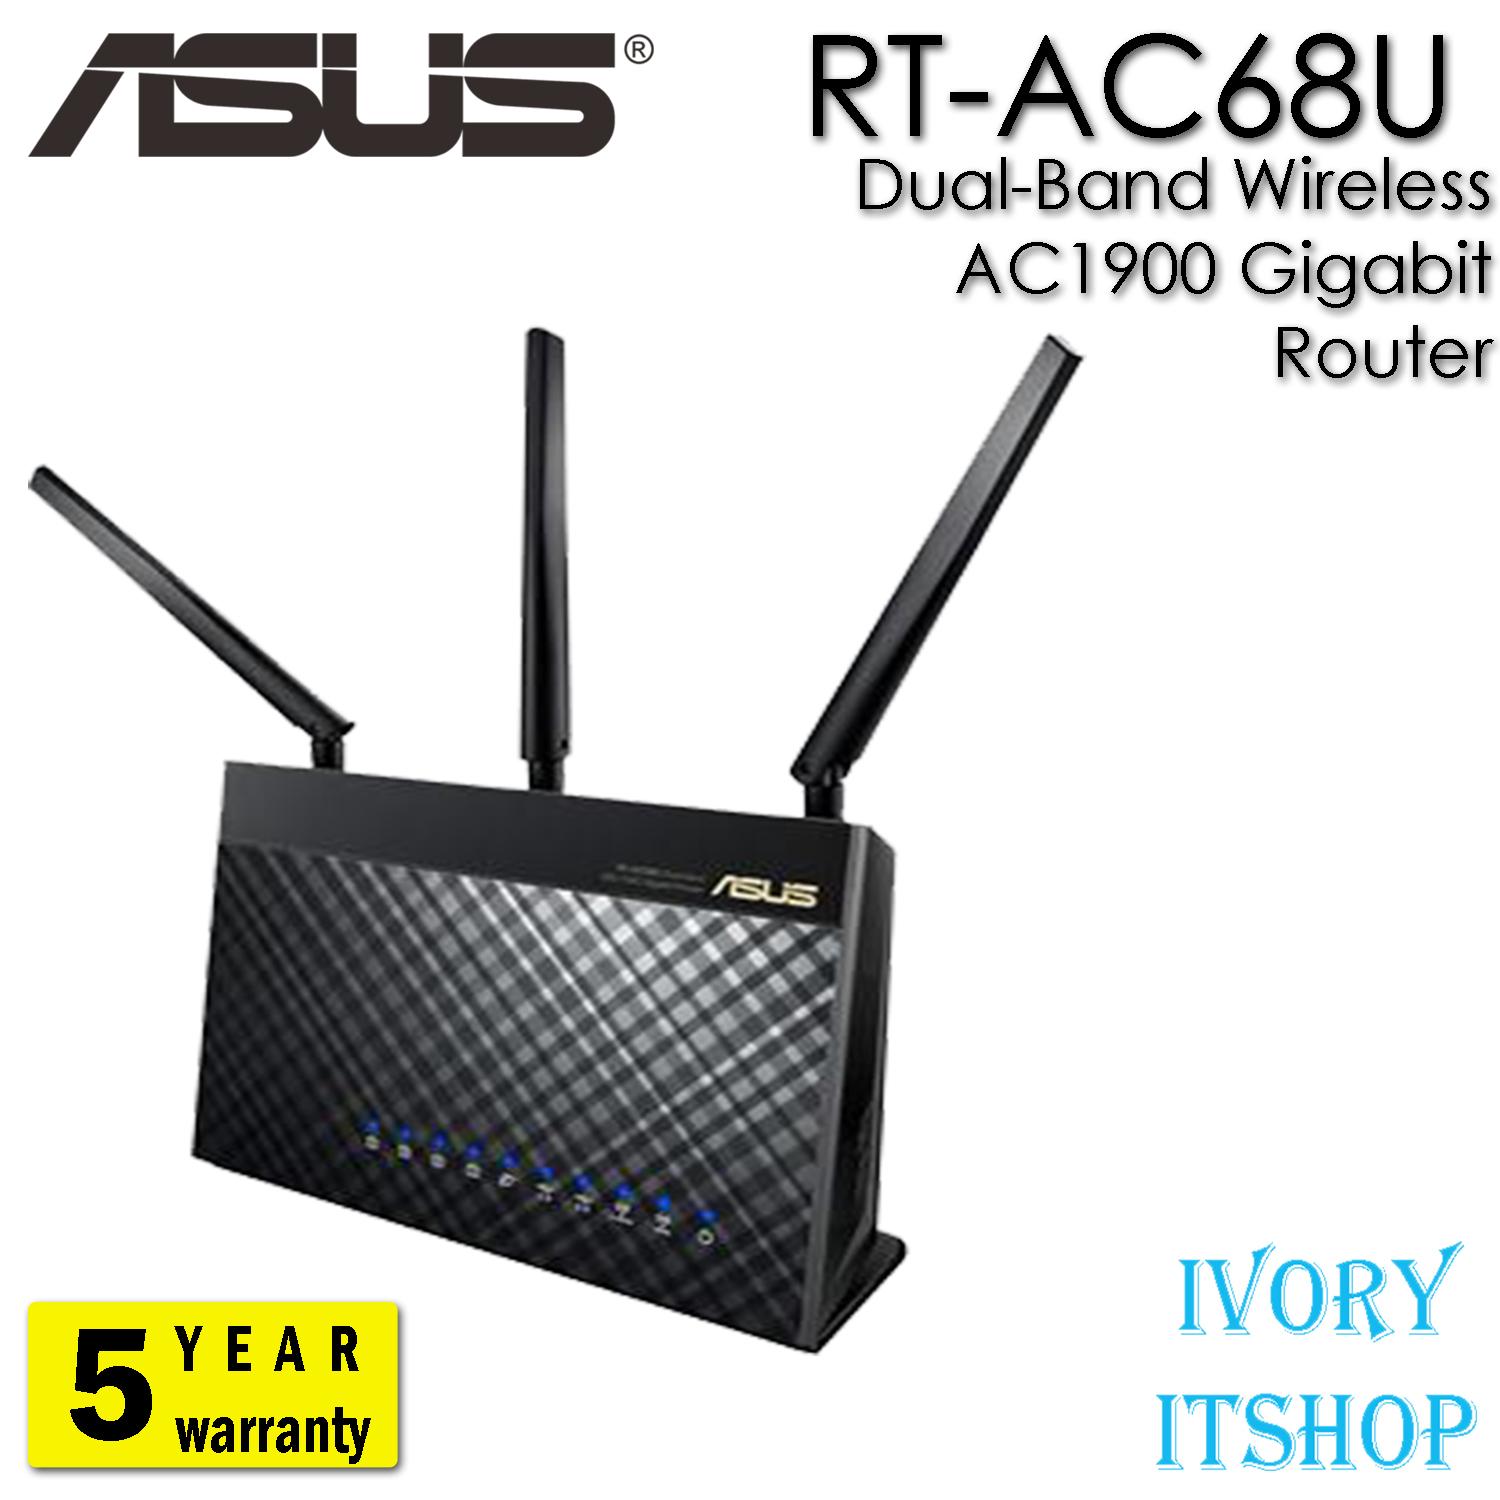 Asus RT-AC68U AiMesh Dual-Band Wireless AC1900 Gigabit Router RT AC68U/ivoryitshop